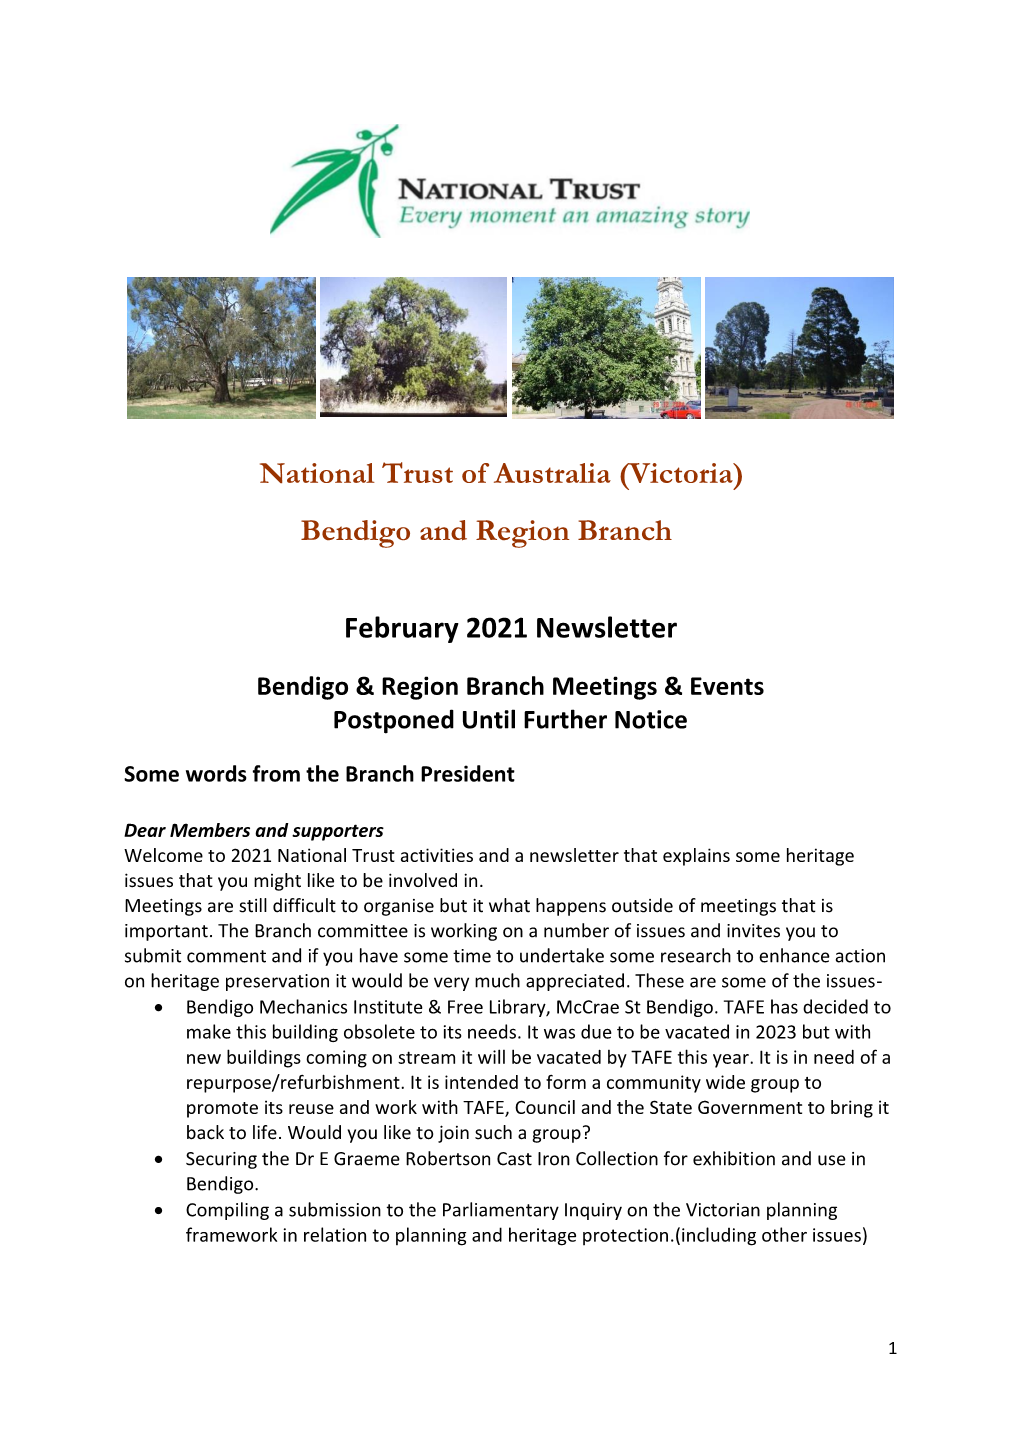 (Victoria) Bendigo and Region Branch February 2021 Newsletter